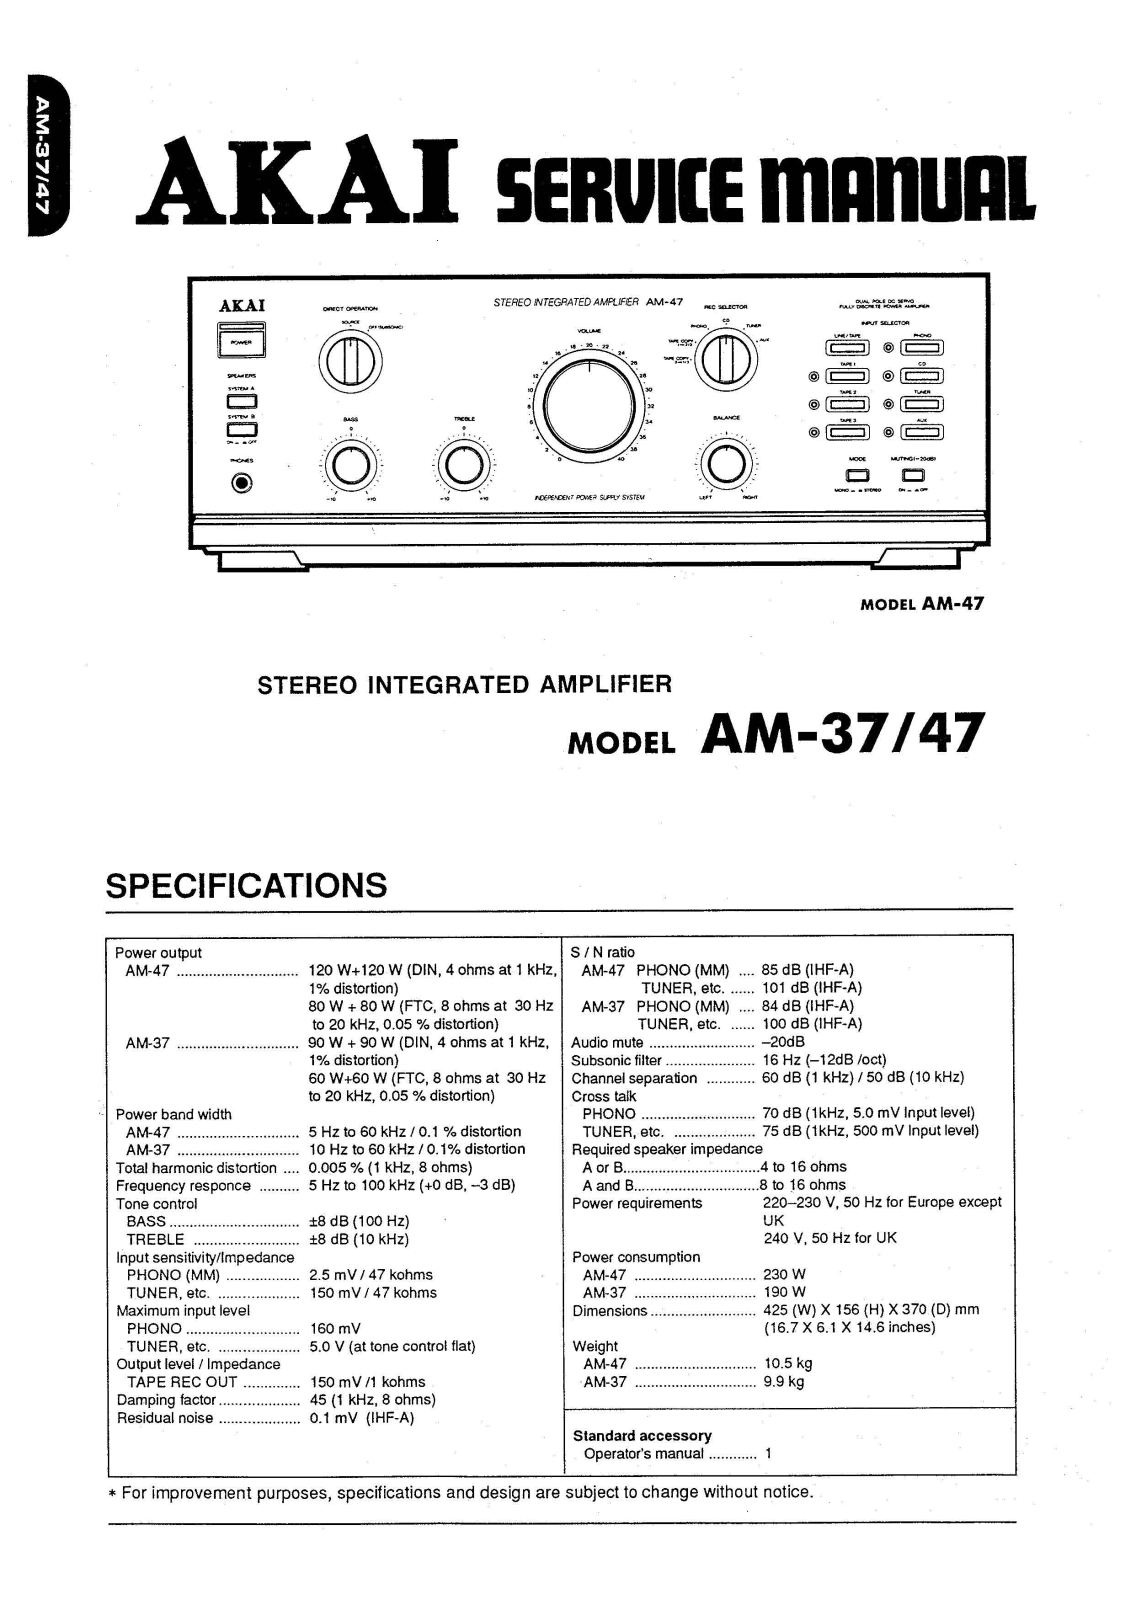 Akai AM-37, AM-47 Service manual